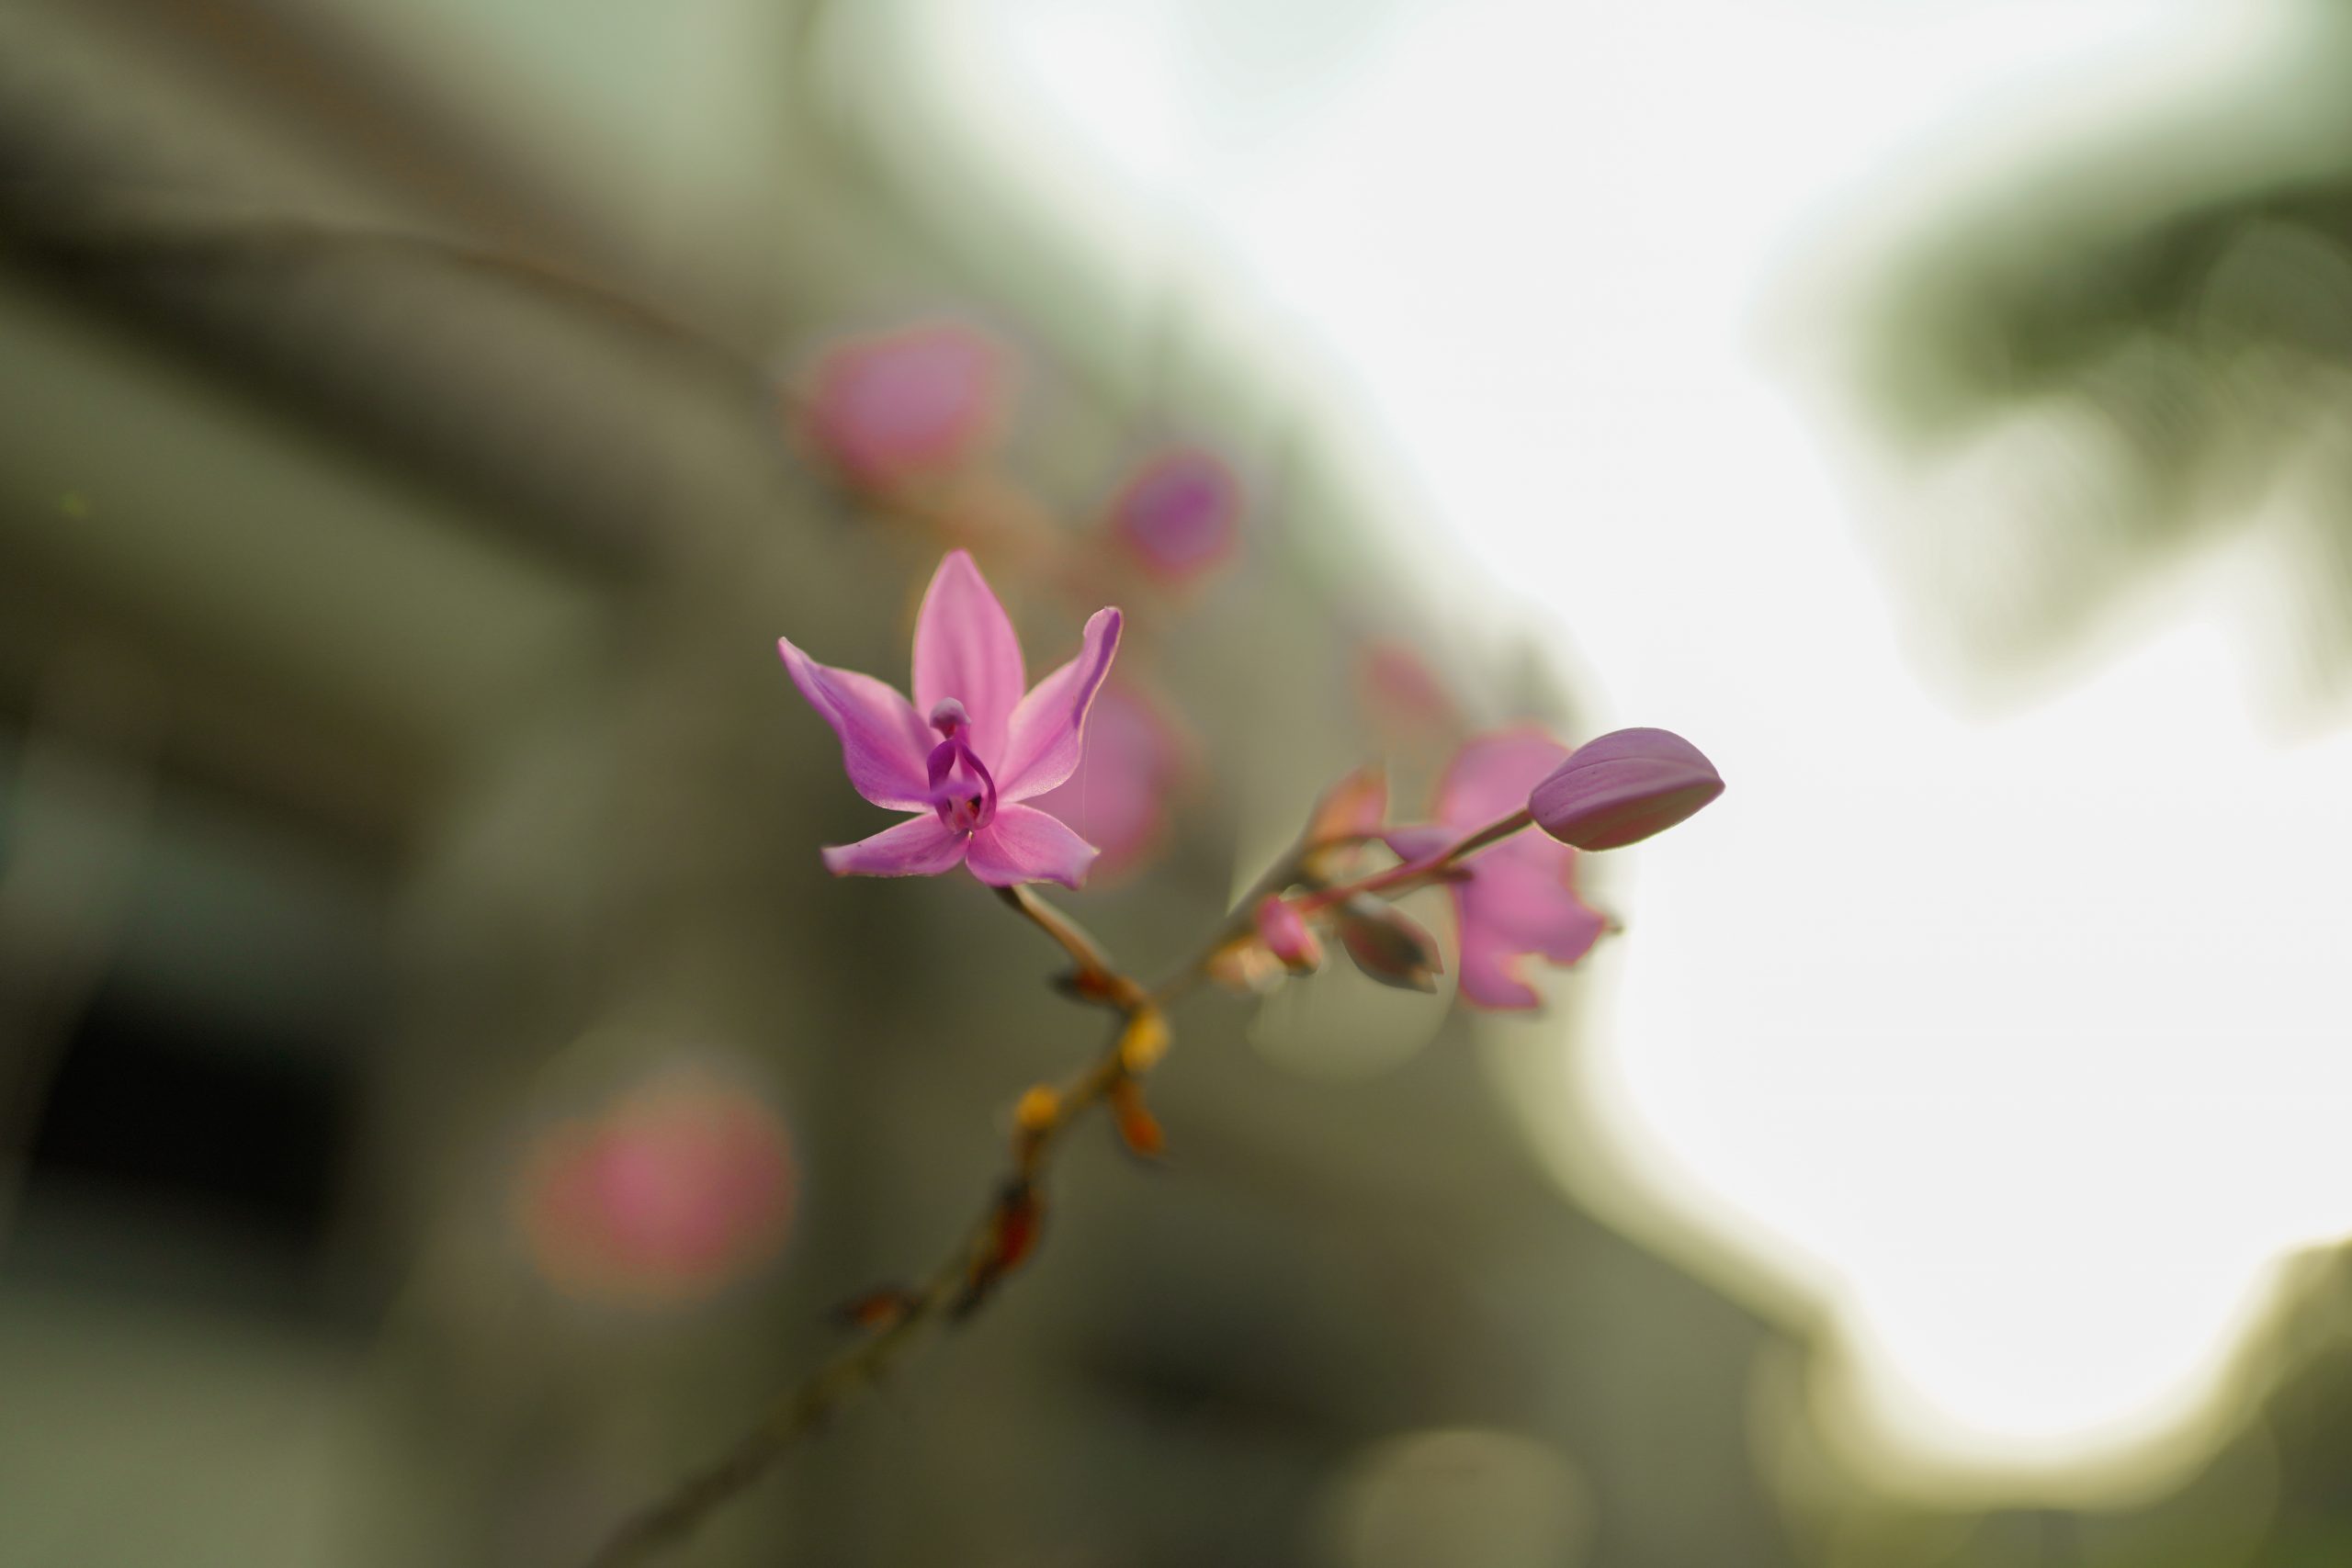 Beautiful pink flower in focus.